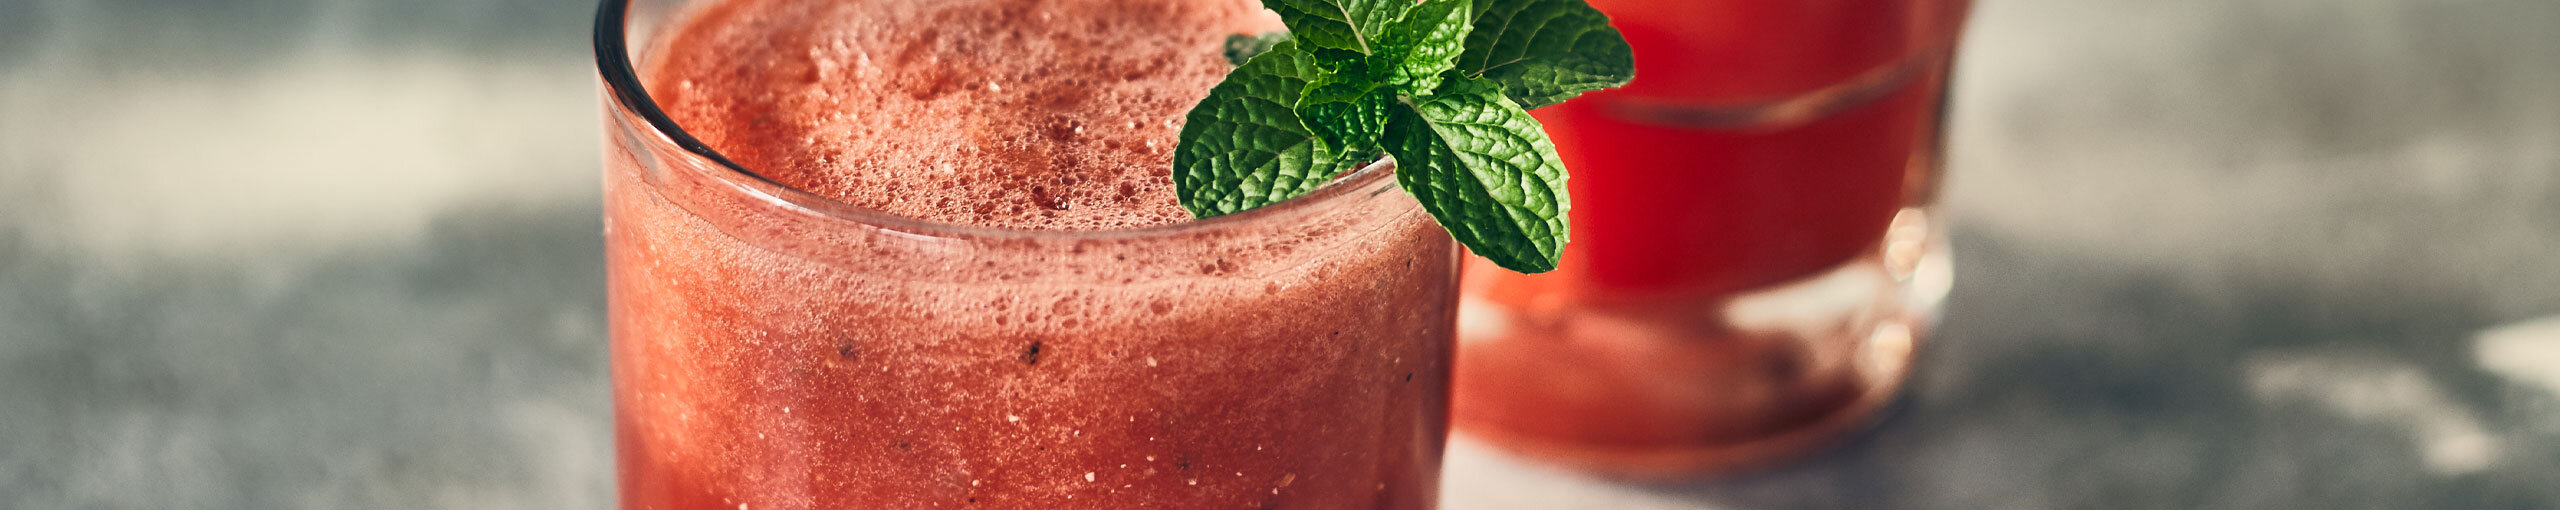 MCT-smoothie med vannmelon og jordbær